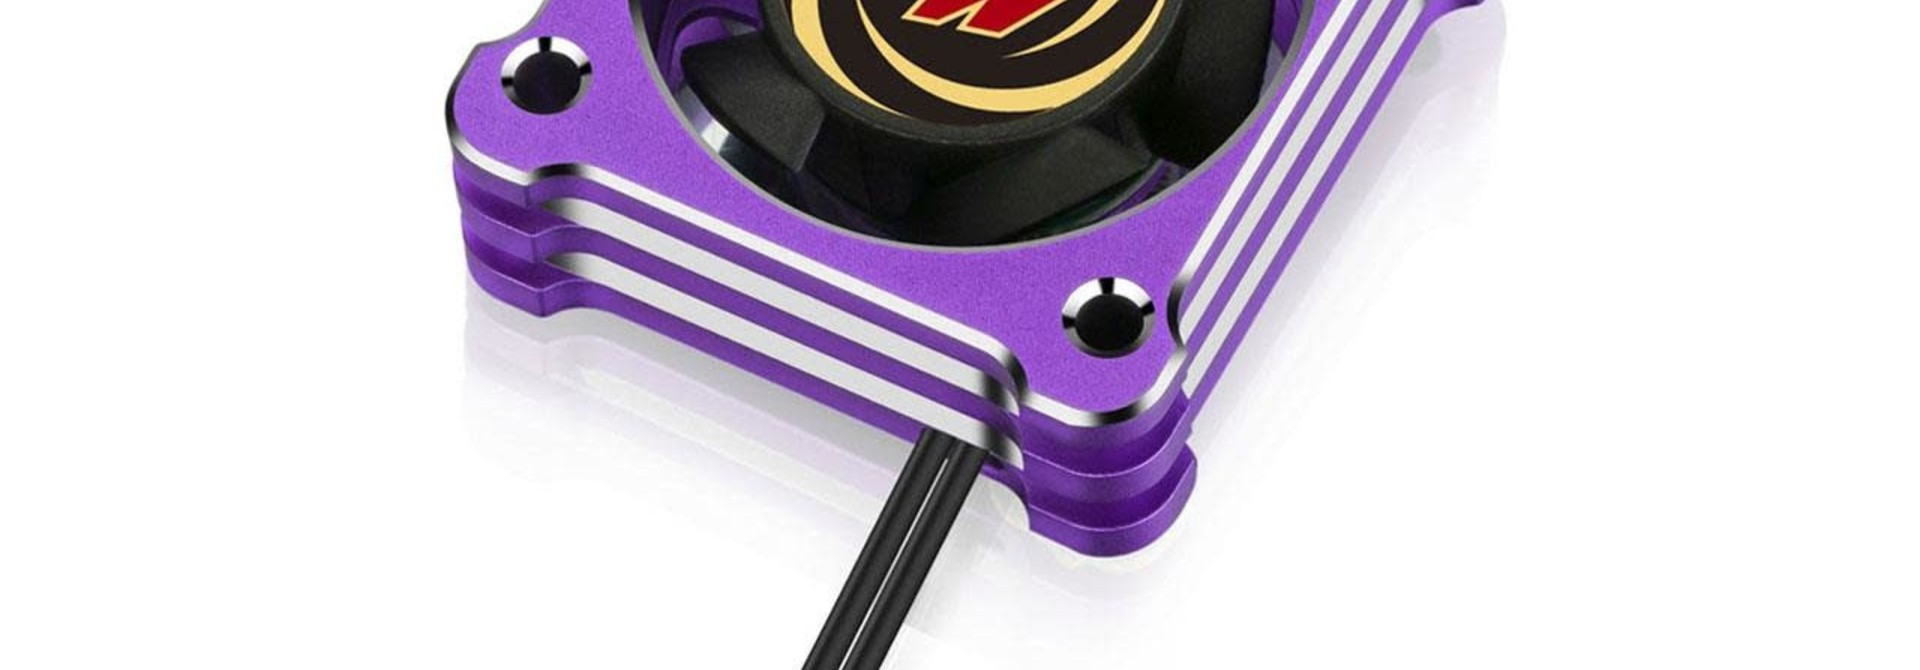 Hobbywing Fan for Xerun XD10 Purple 3010BH 6V 20000RPM